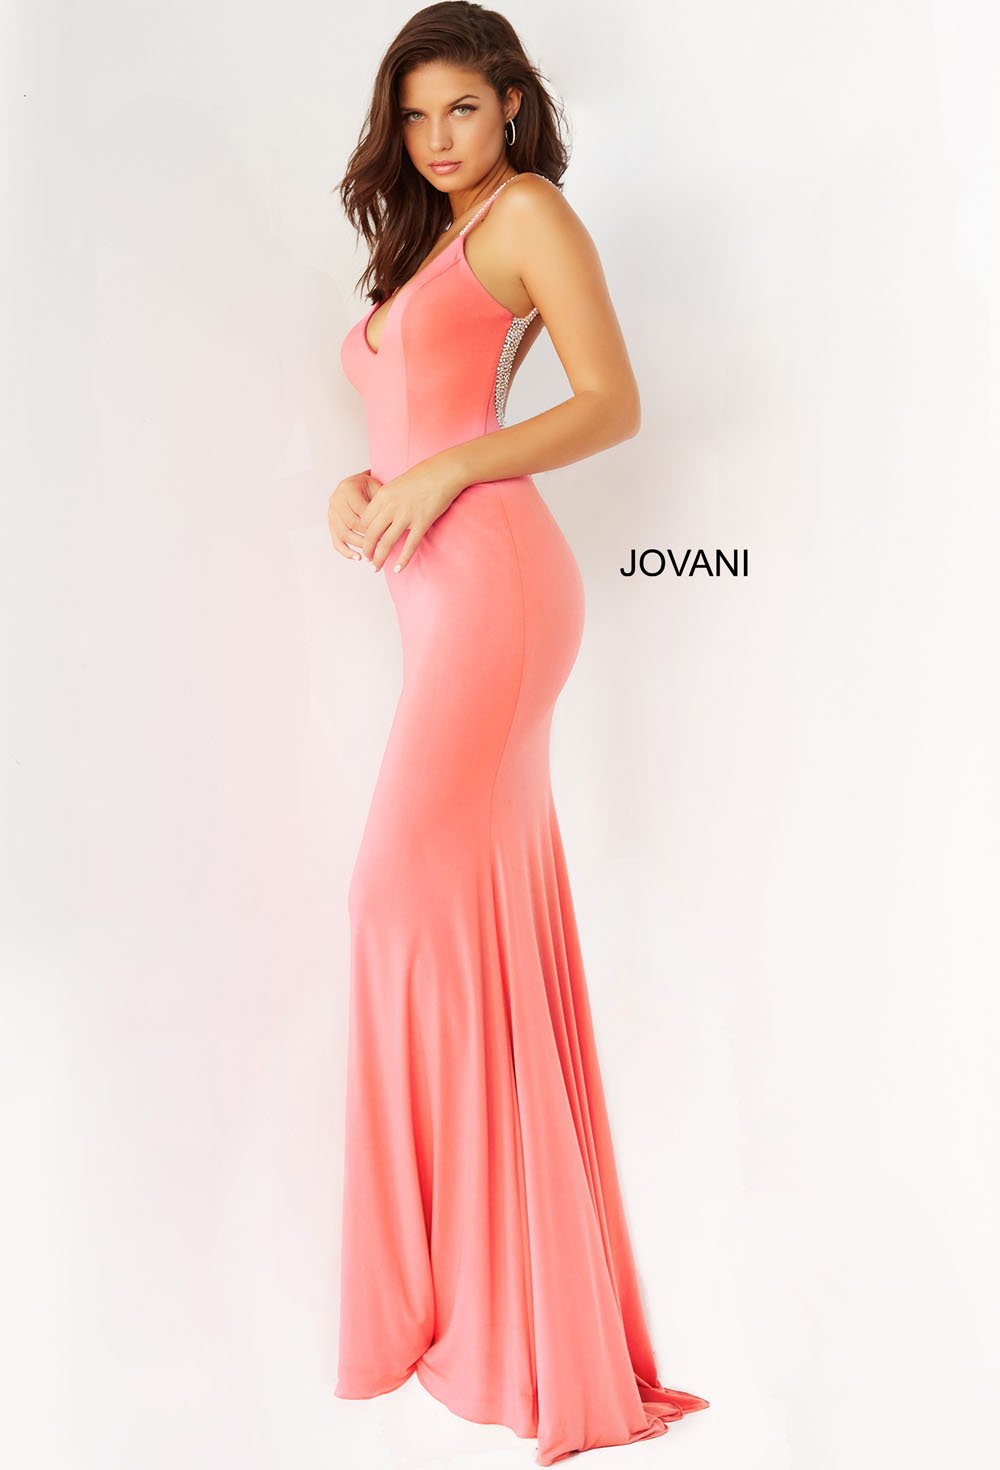 Jovani 07297 Correct prom dresses images.